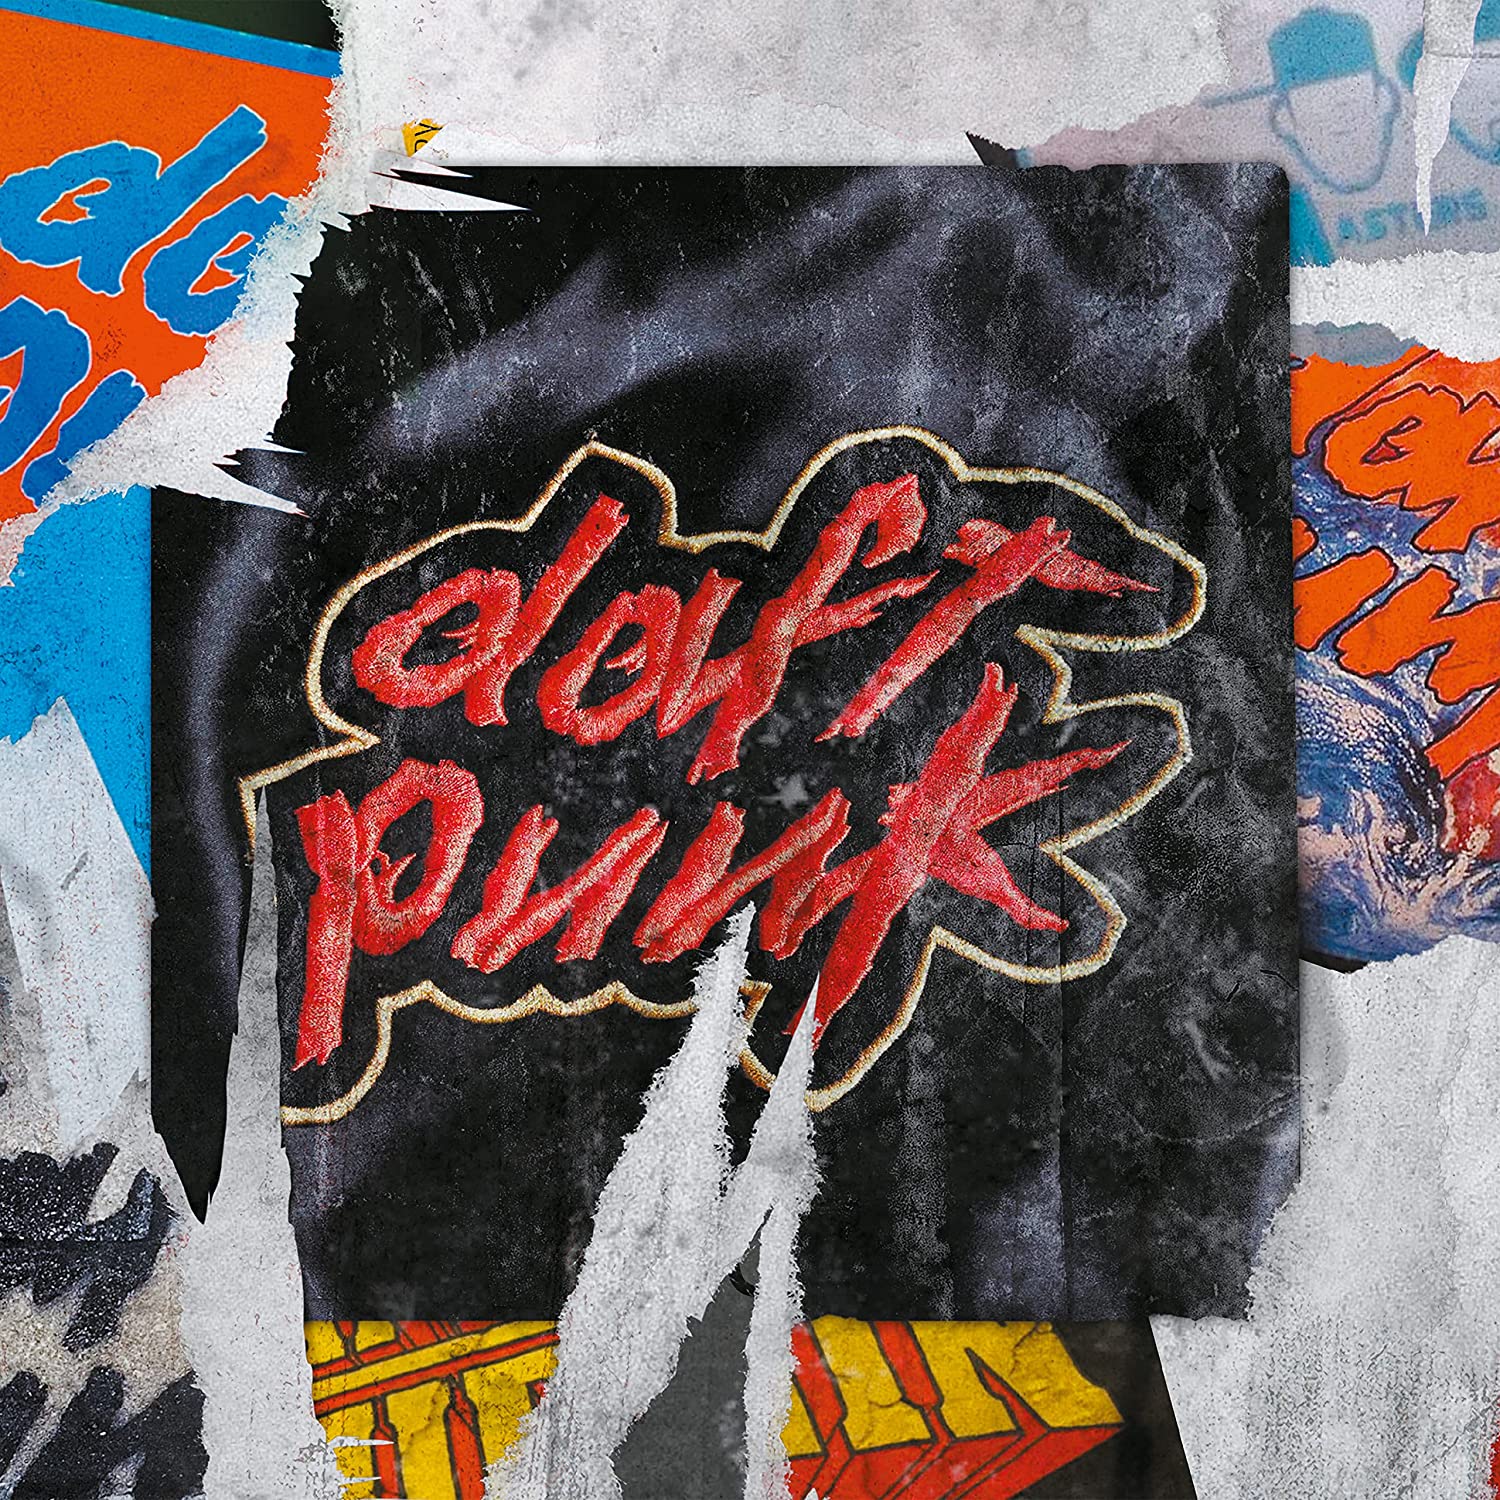 Daft Punk - "Homework": Remixes